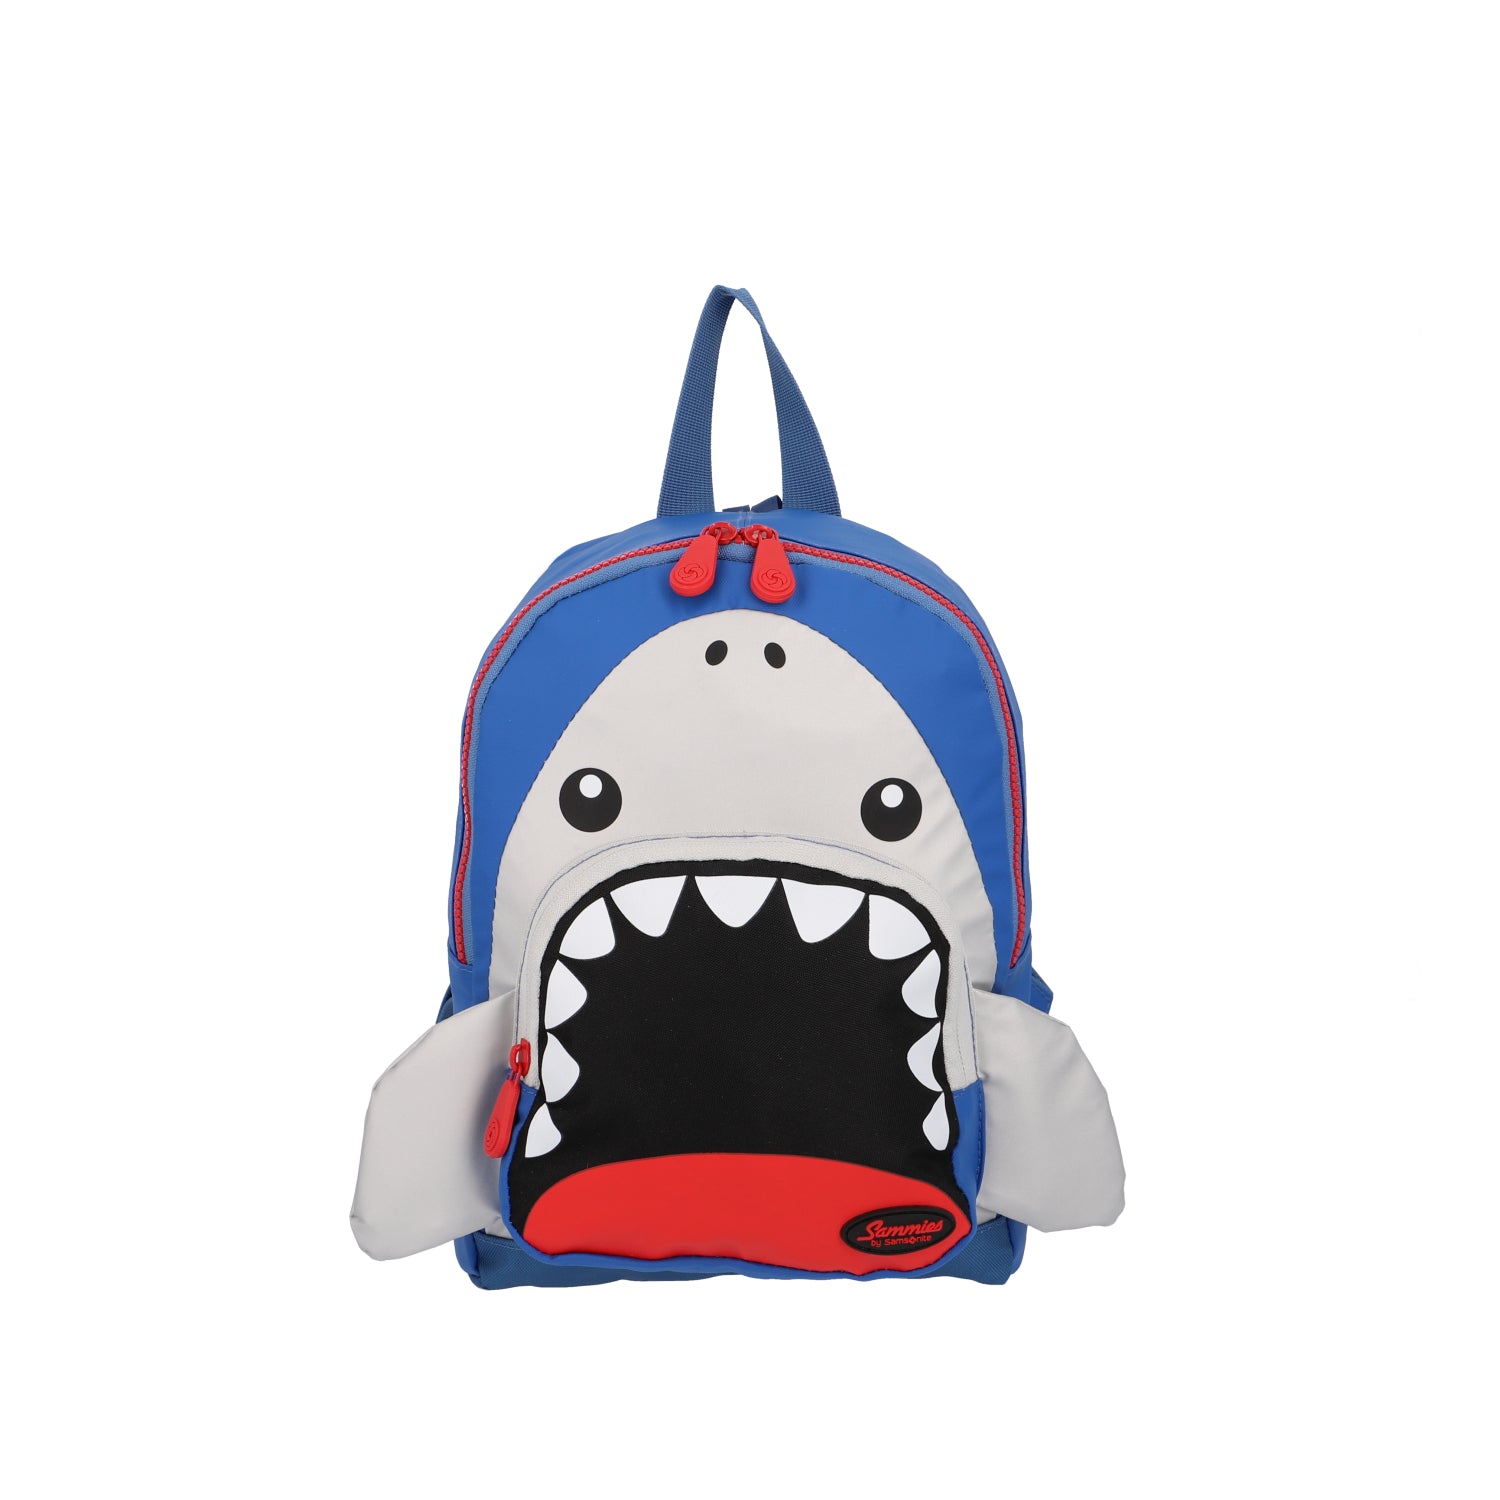 Mochila Pre-School Backpack Play 2Sm Blue Shark